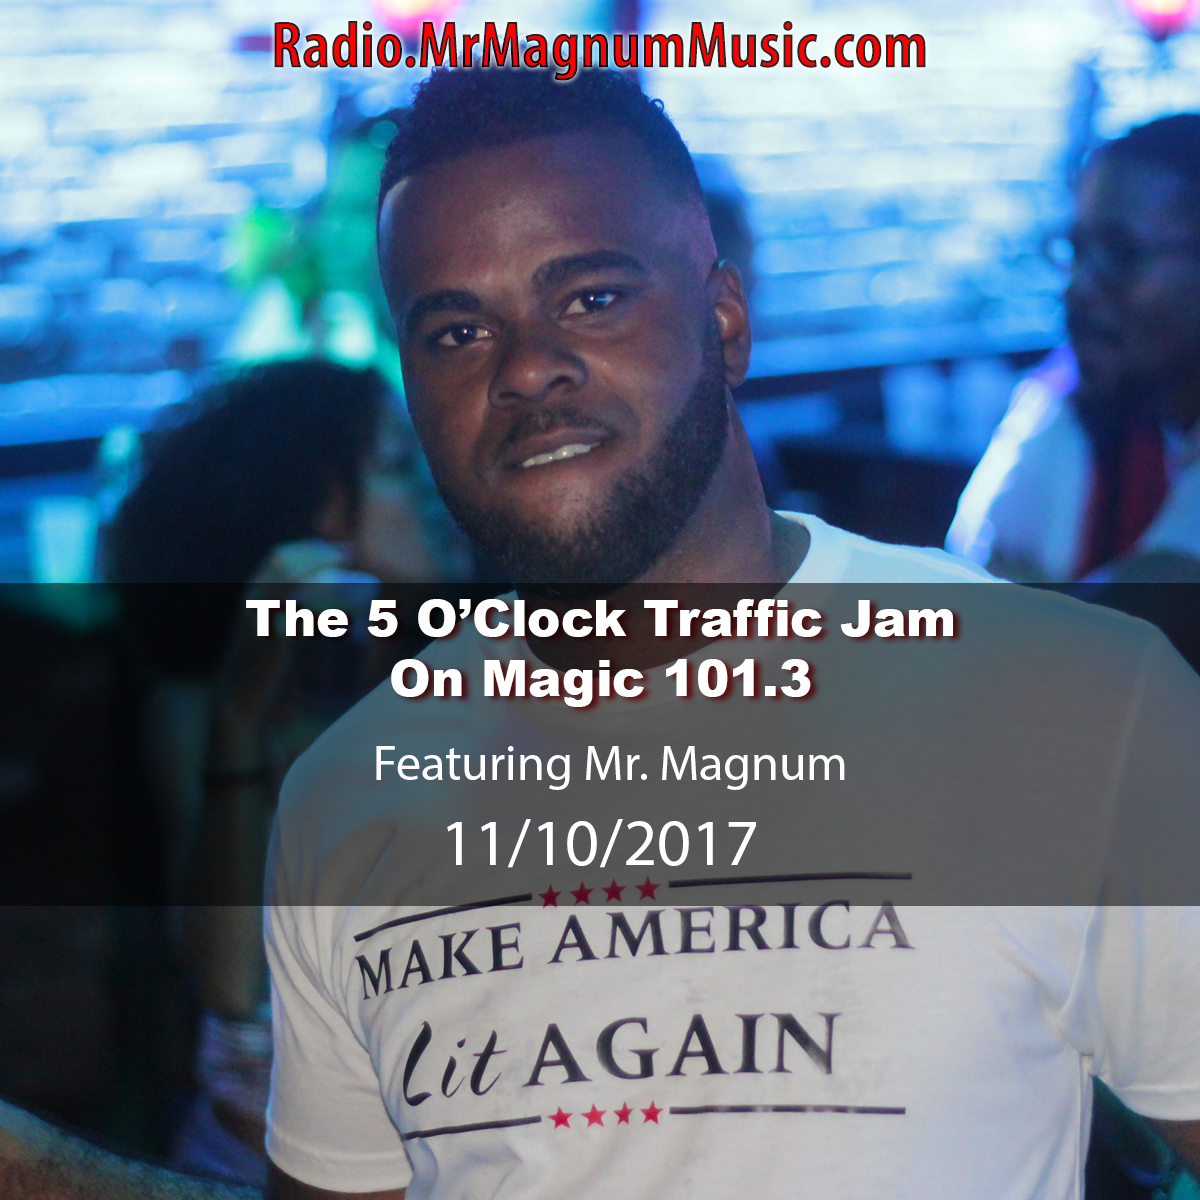 The 5 O'Clock Traffic Jam 20171110 featuring Gainesville's #1 DJ, Mr. Magnum on Magic 101.3